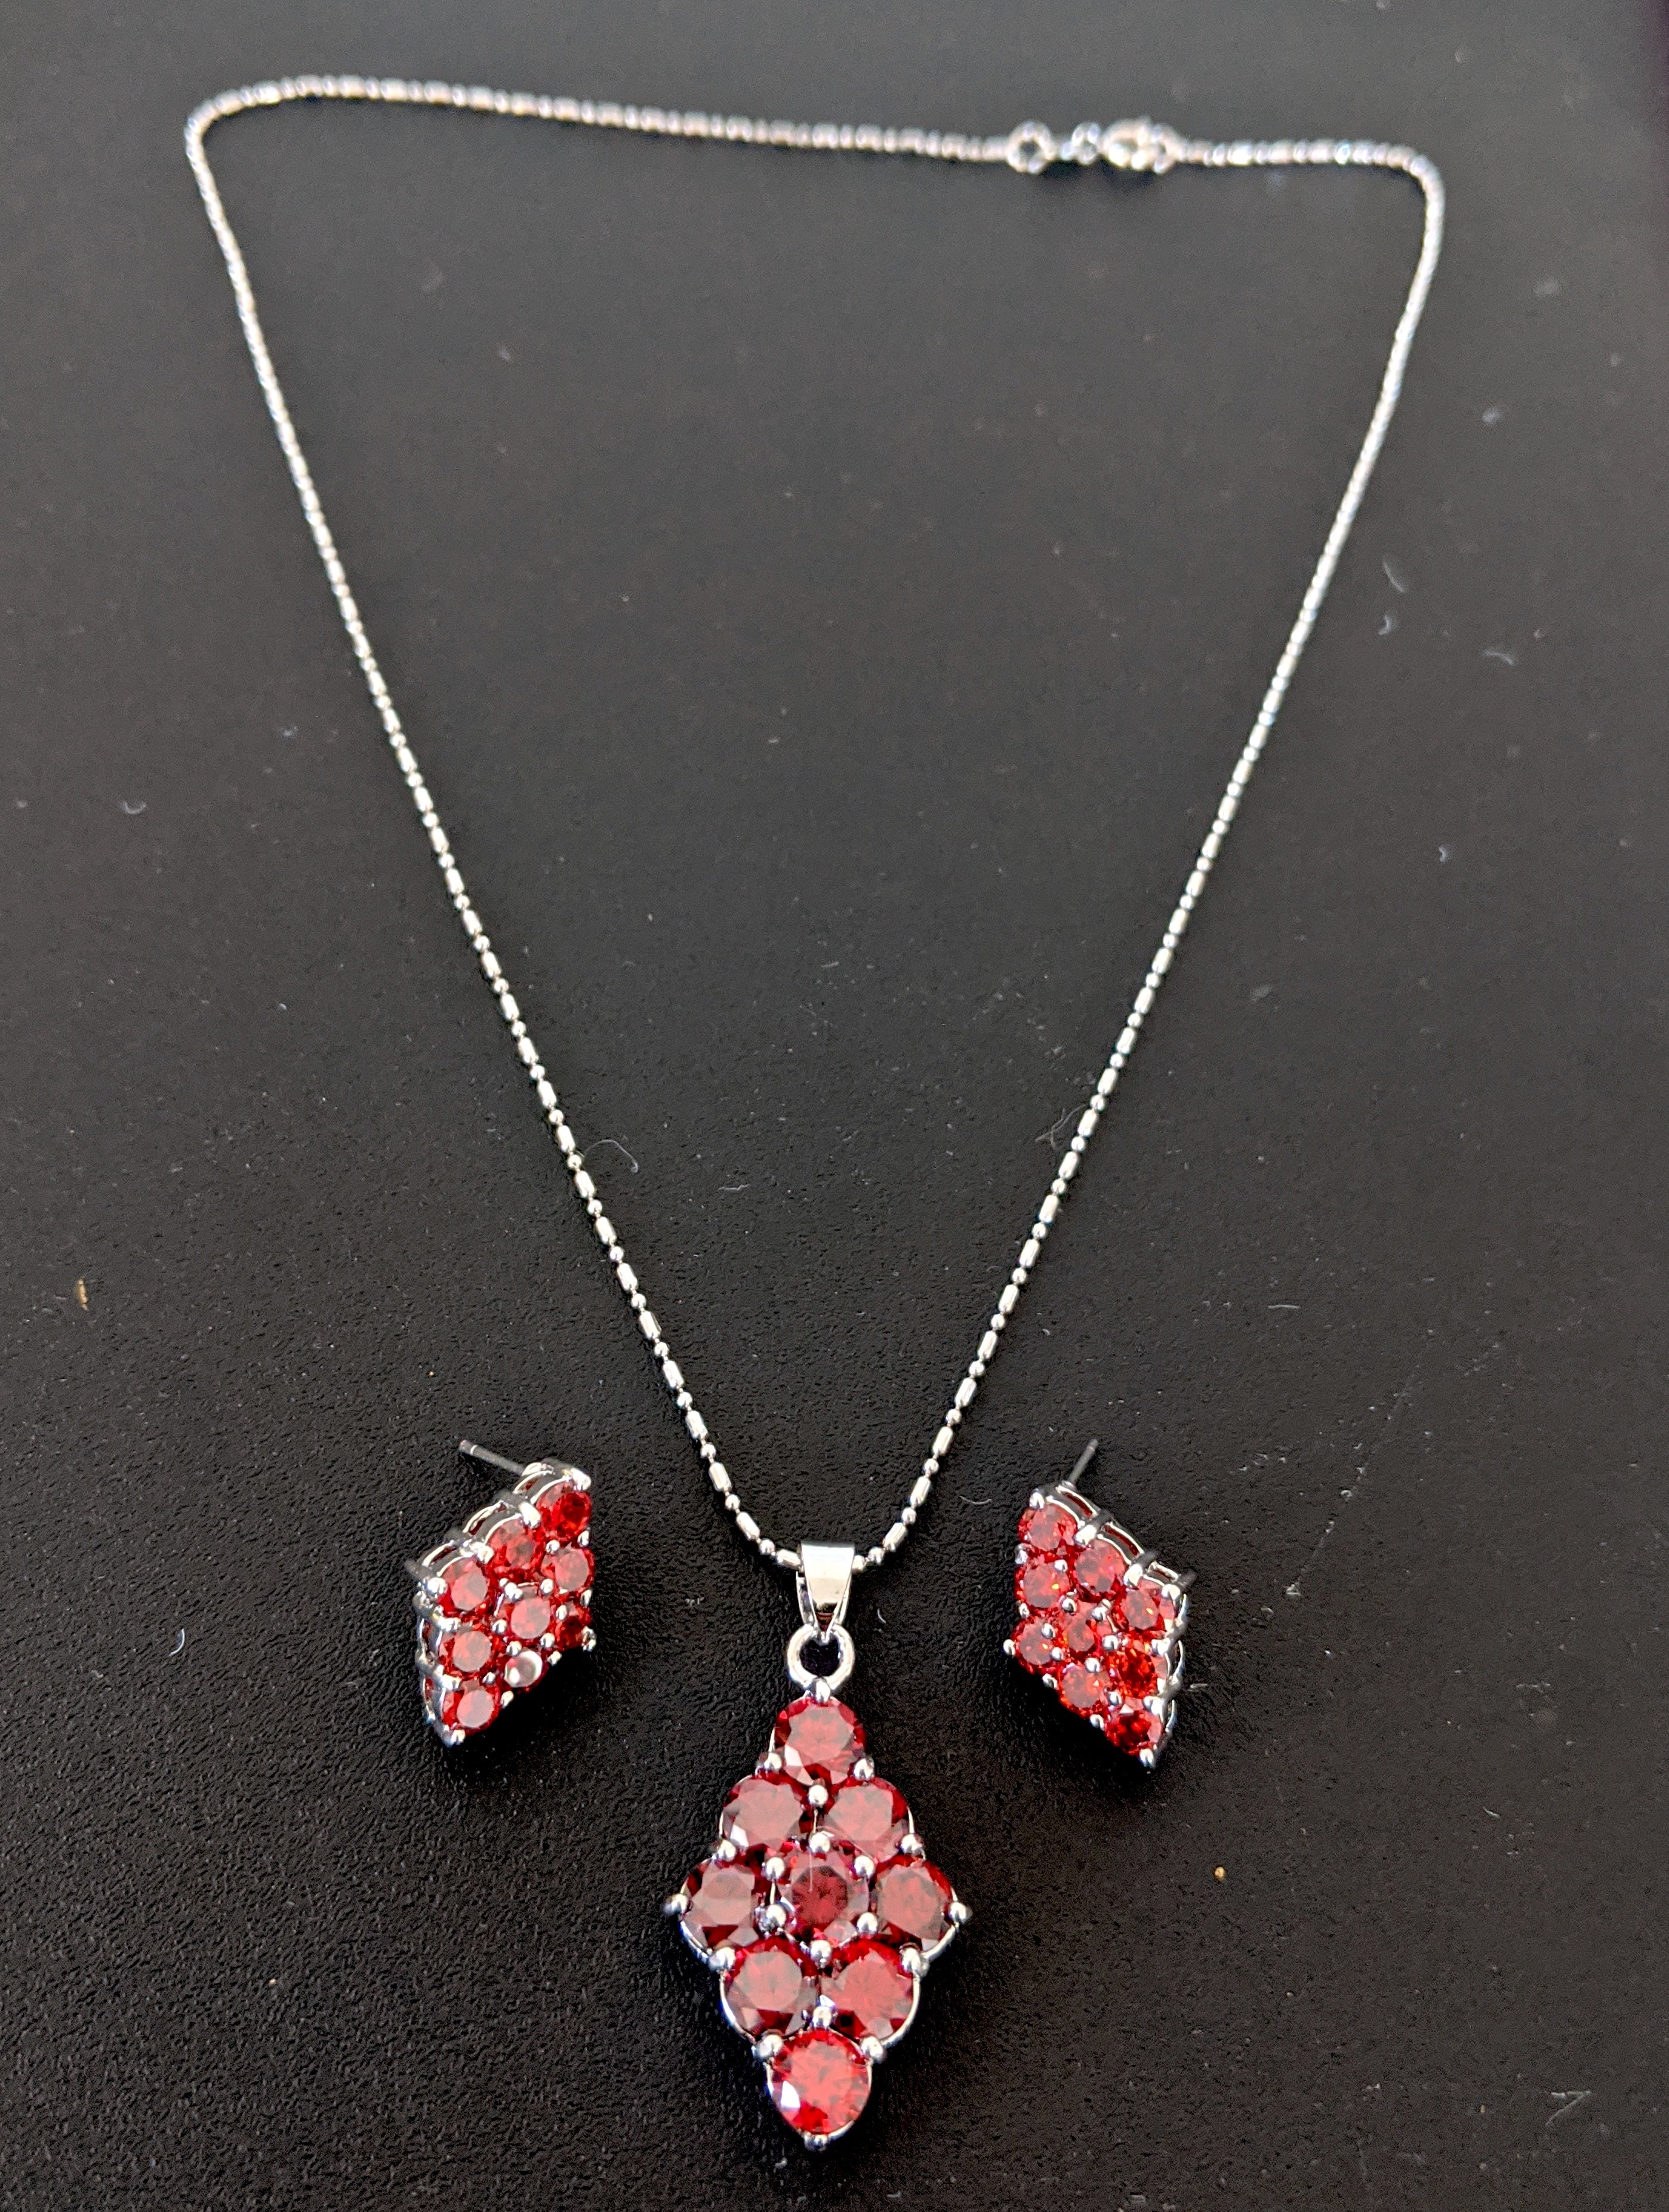 77.05 carat Diamond Riviera Necklace (Platinum) — Shreve, Crump & Low